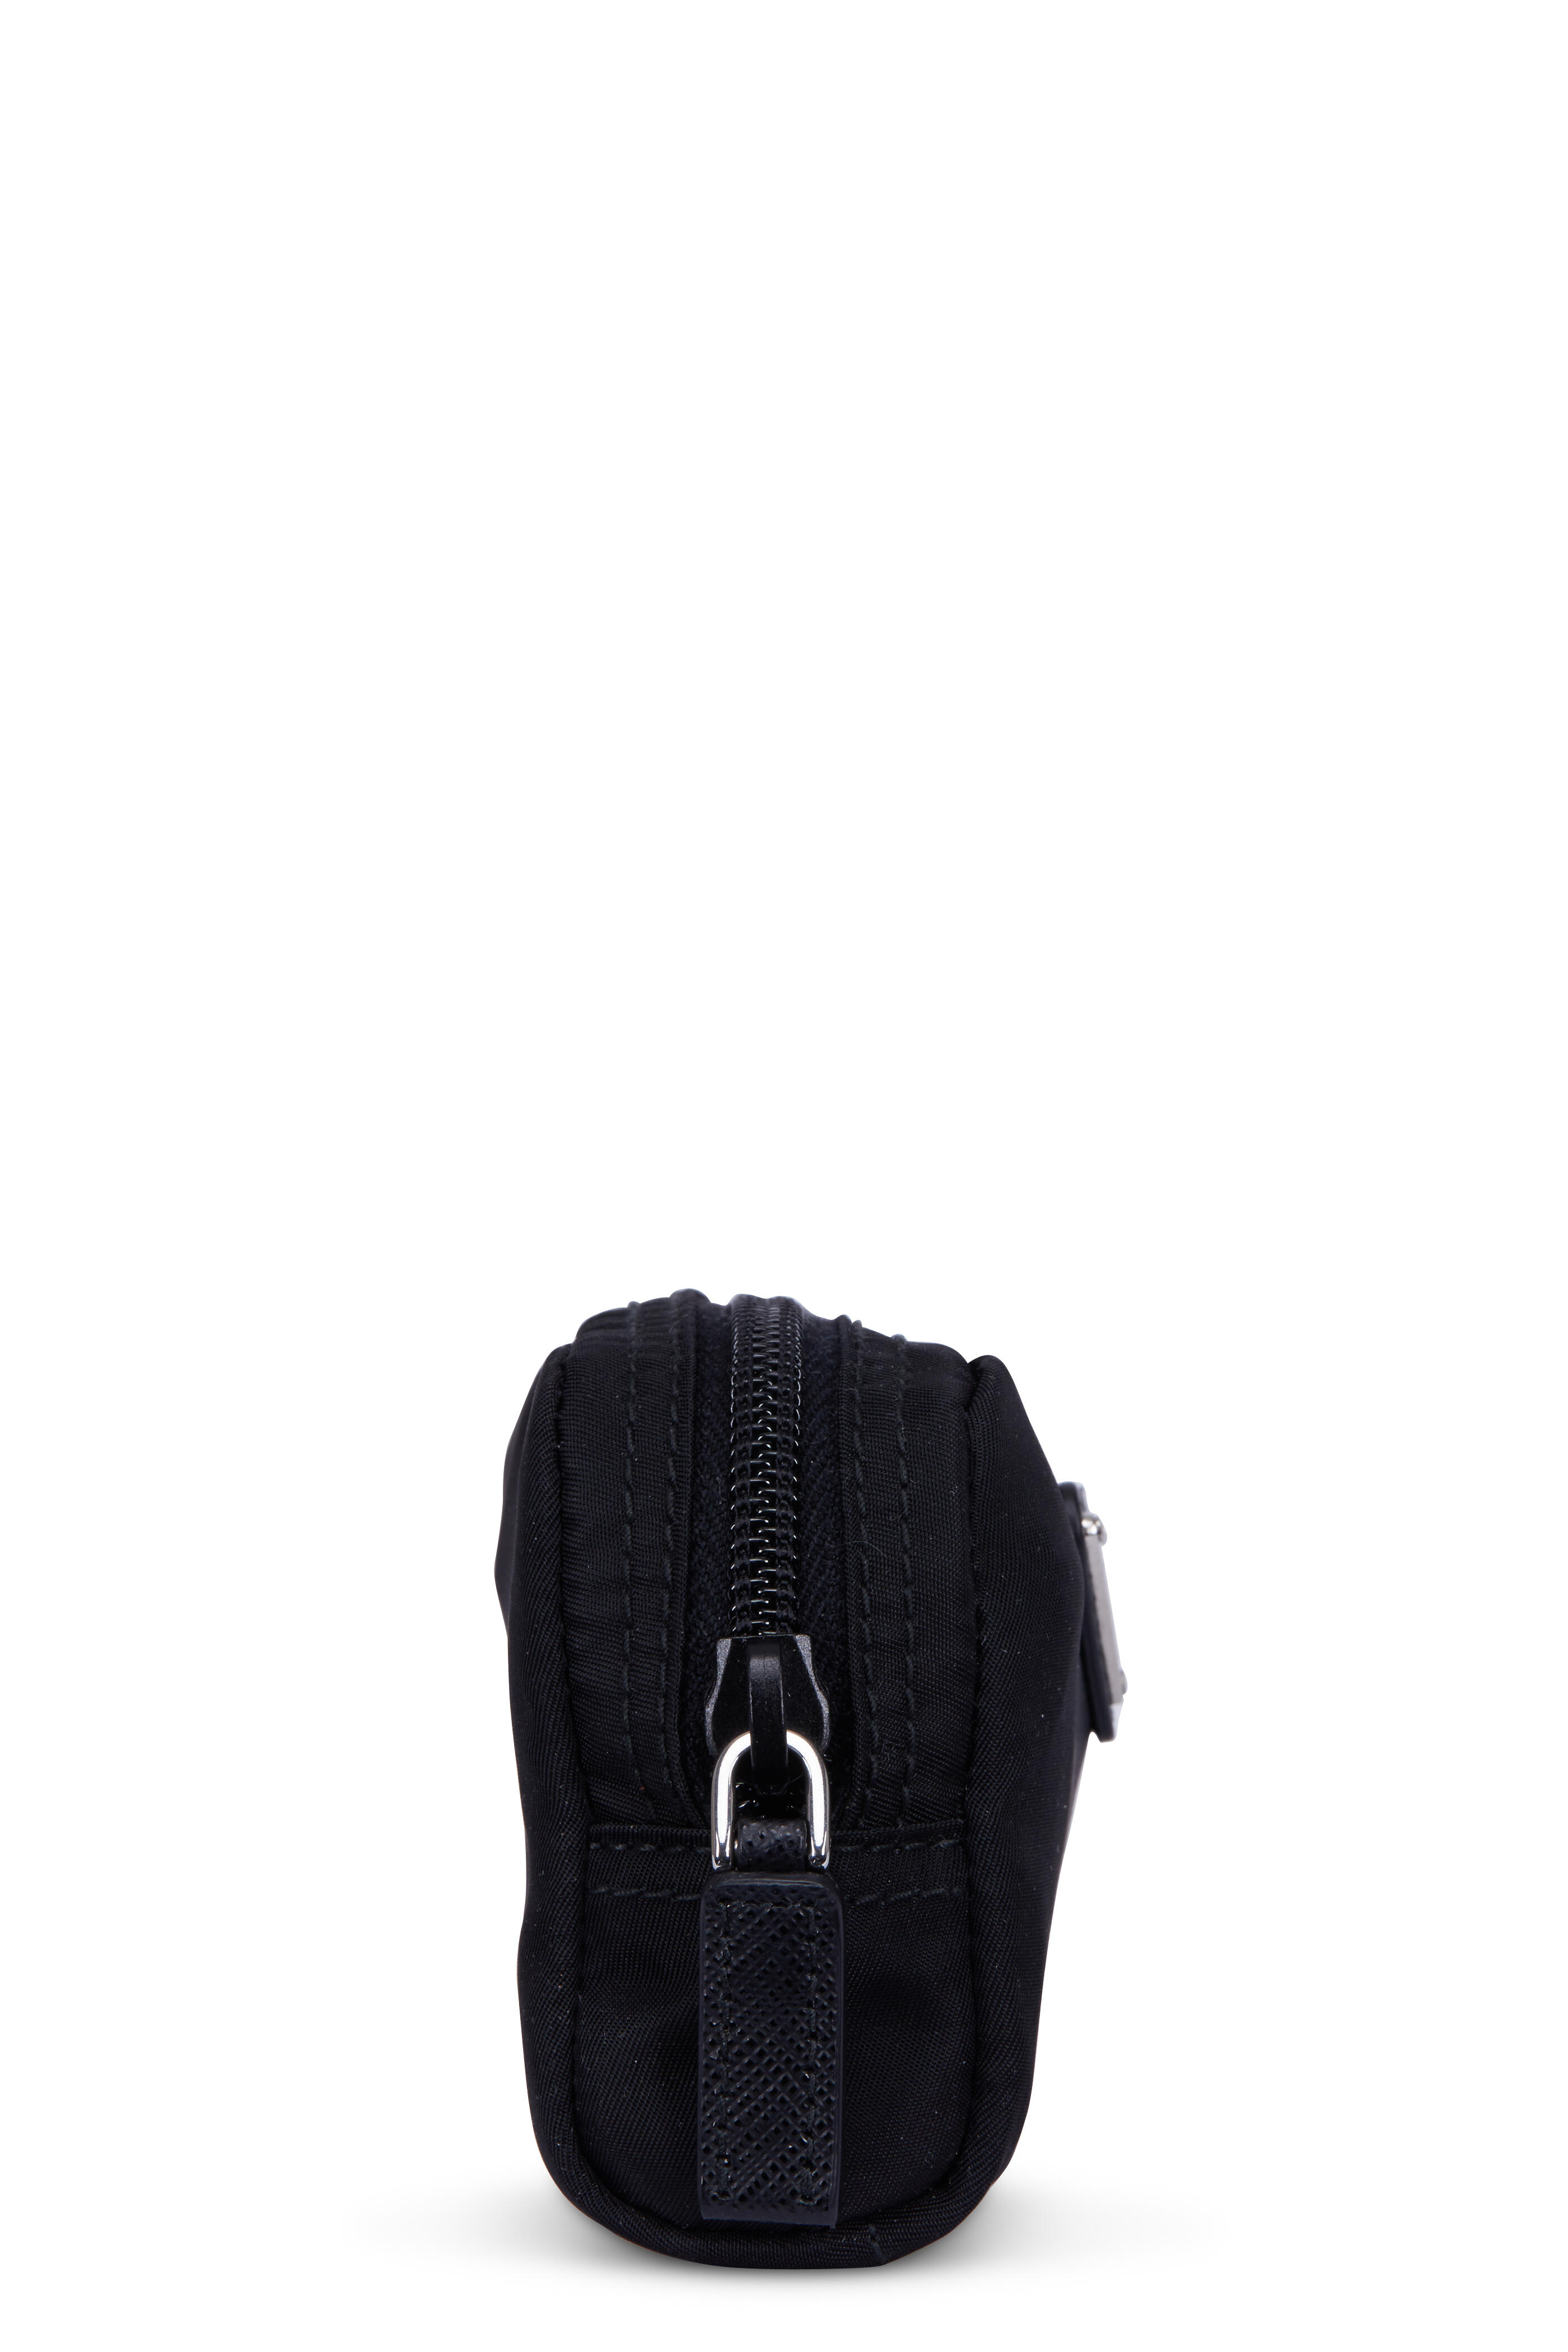 PRADA Satin Crystal Zip Phone Case Crossbody Bag Black 1002630